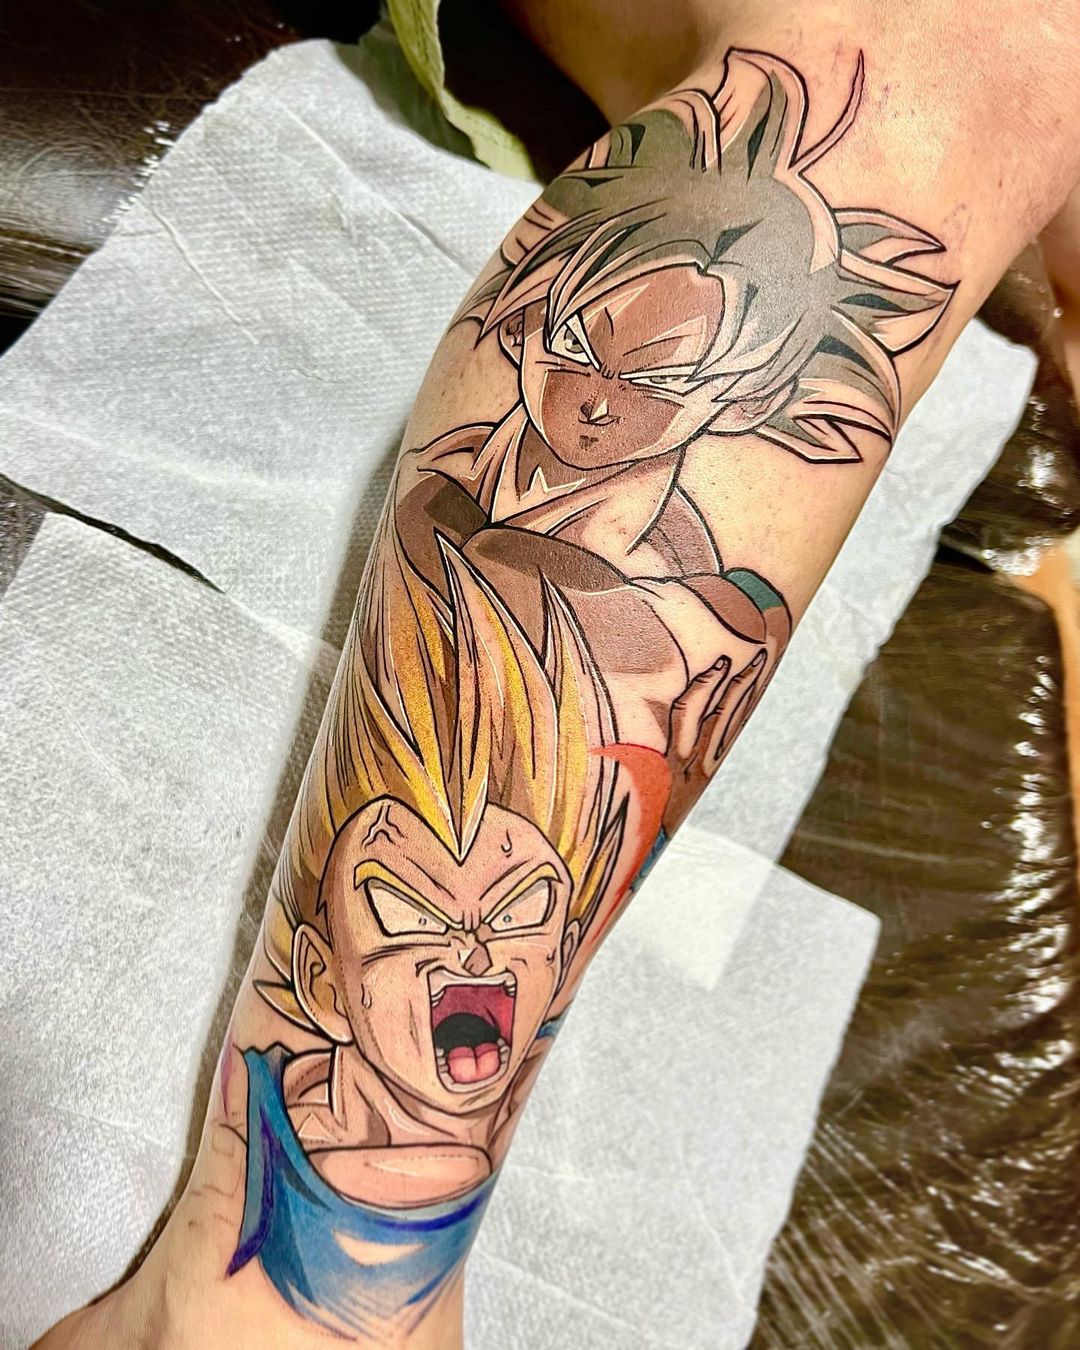 Check out my Half Goku Half Majin Vegeta custom tattoo  rdbz